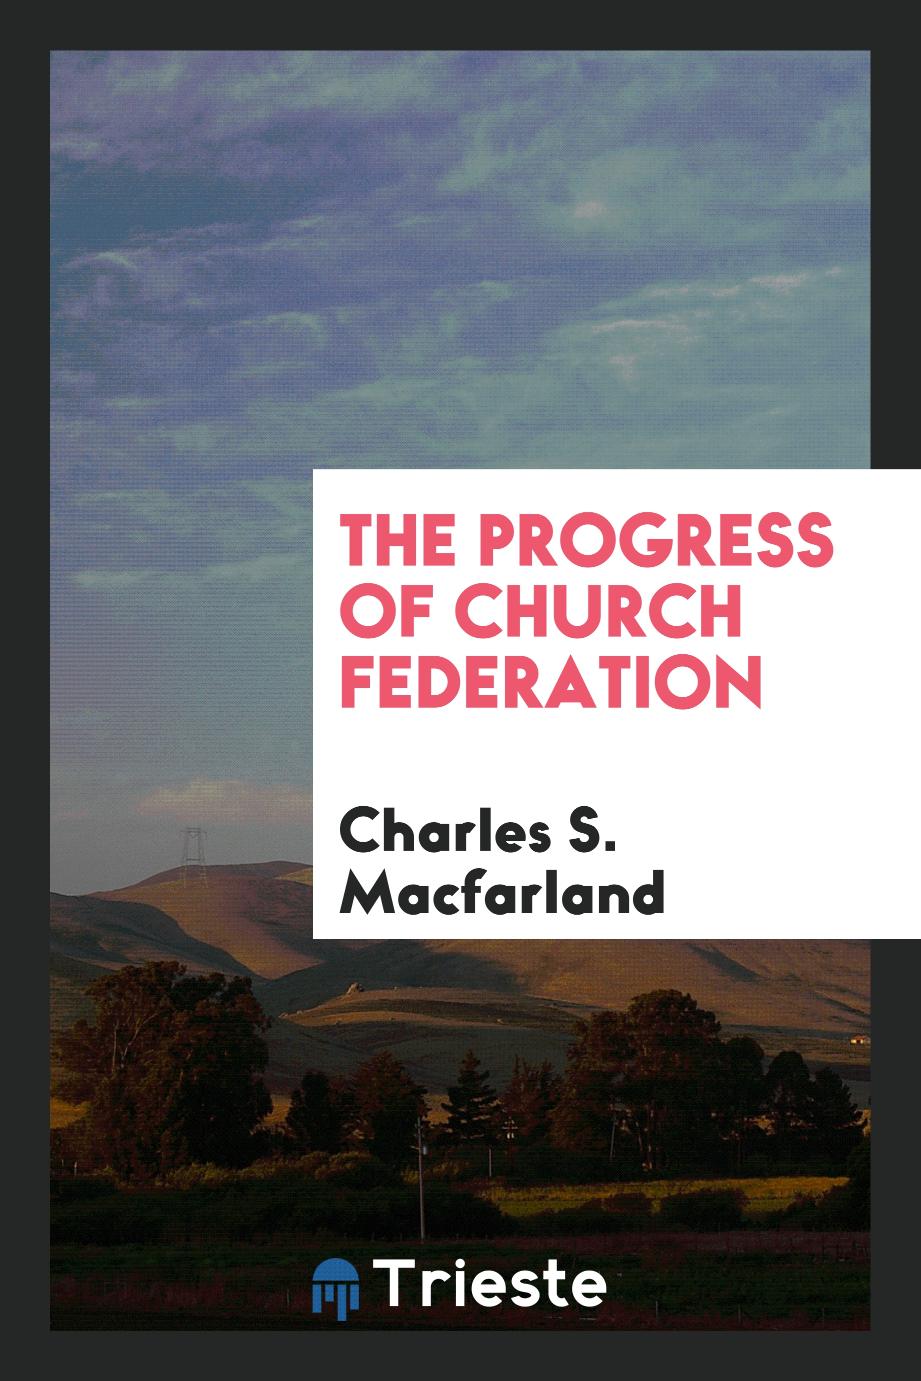 The progress of church federation